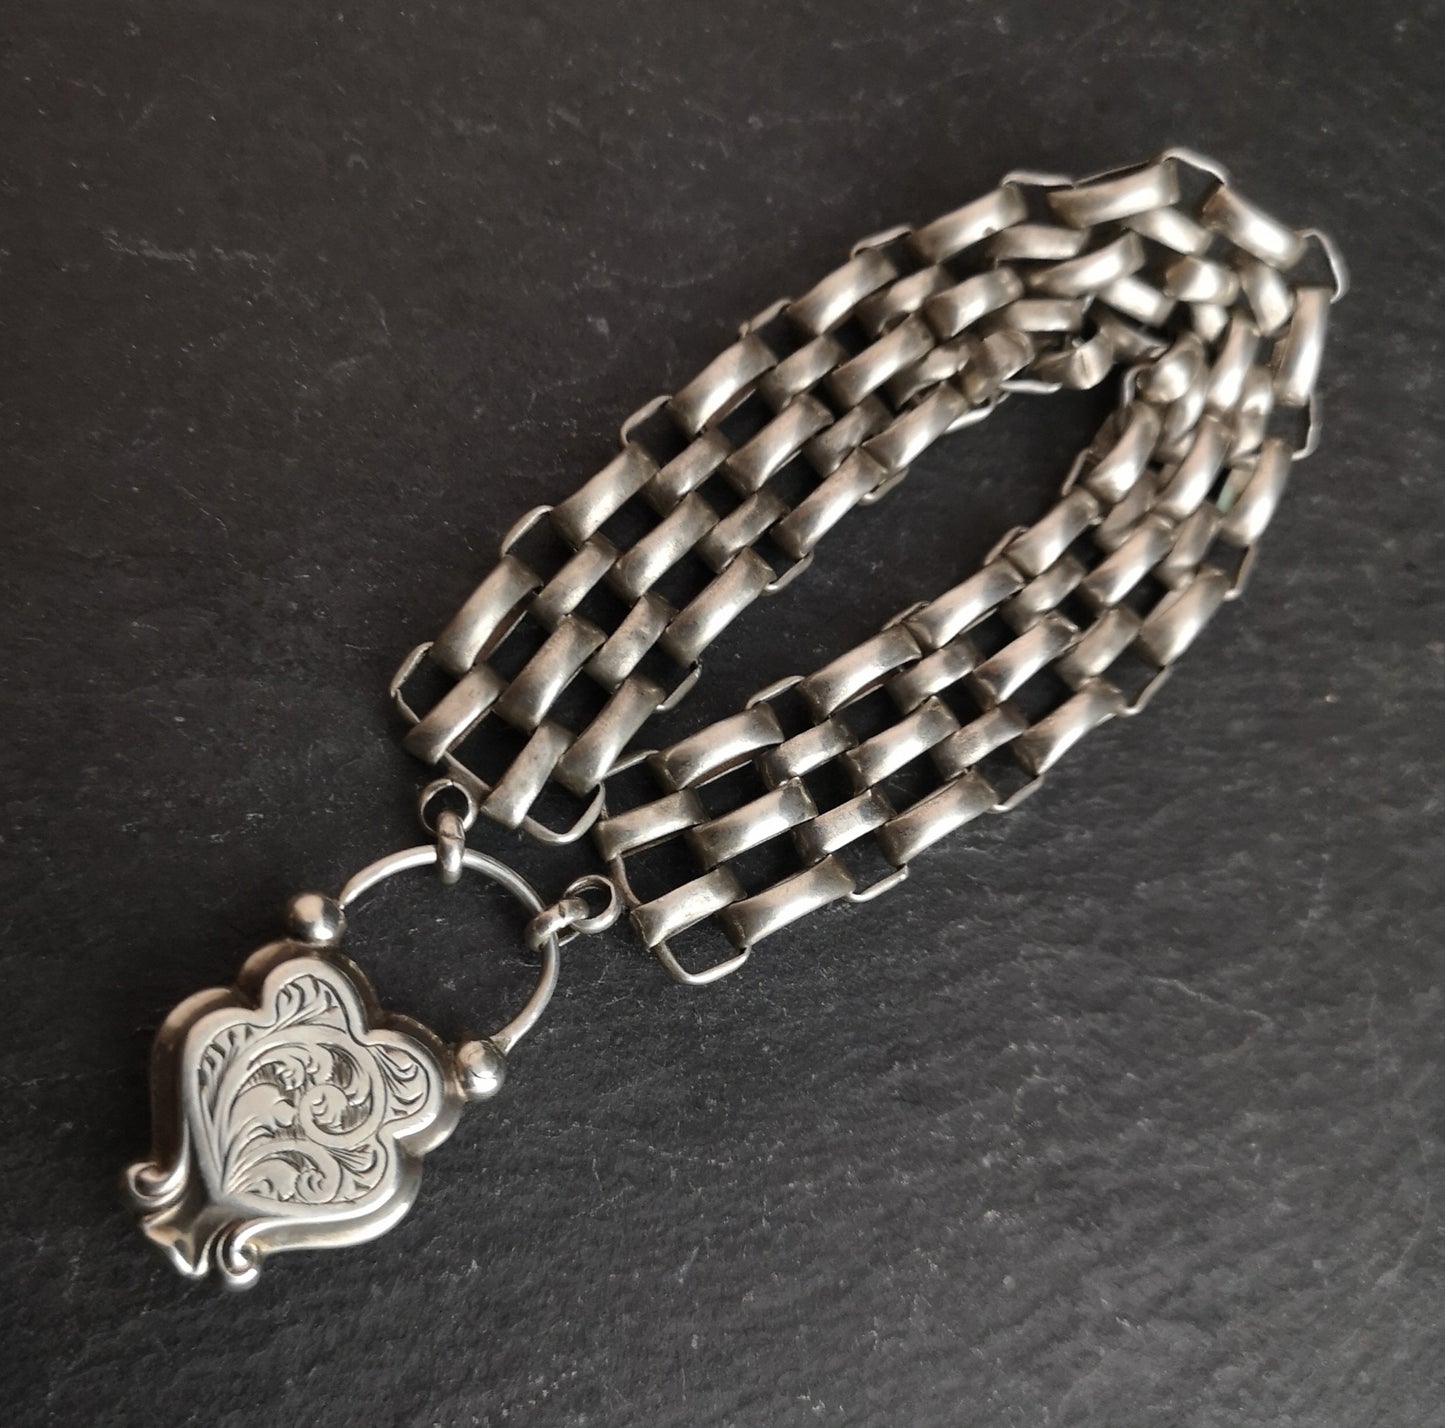 Antique silver mourning bracelet, padlock clasp